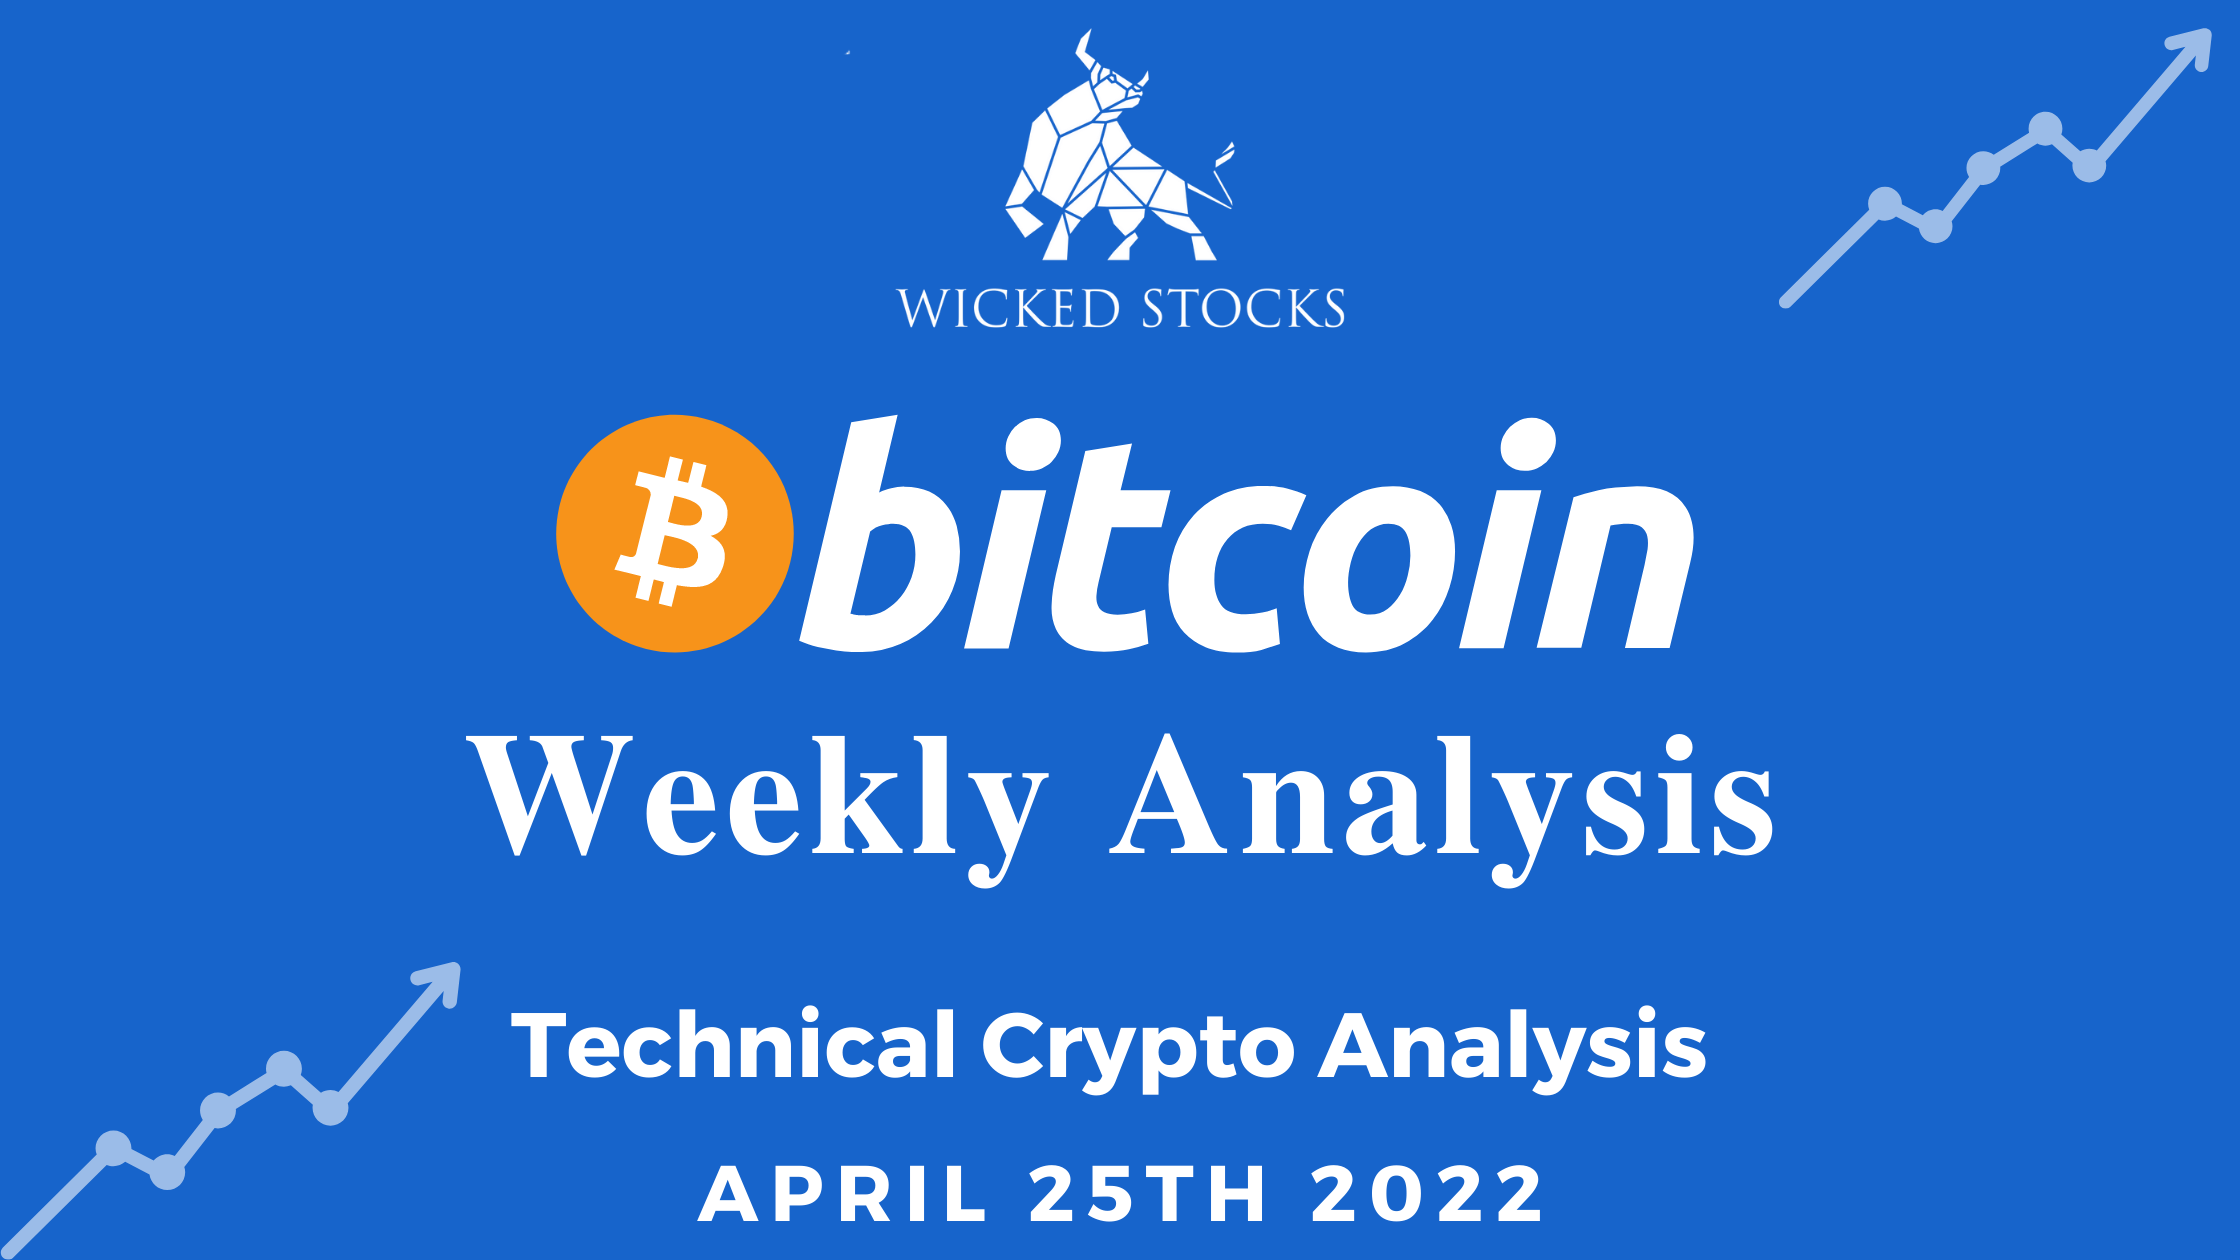 Bitcoin (BTC) Weekly Analysis 4/25/22